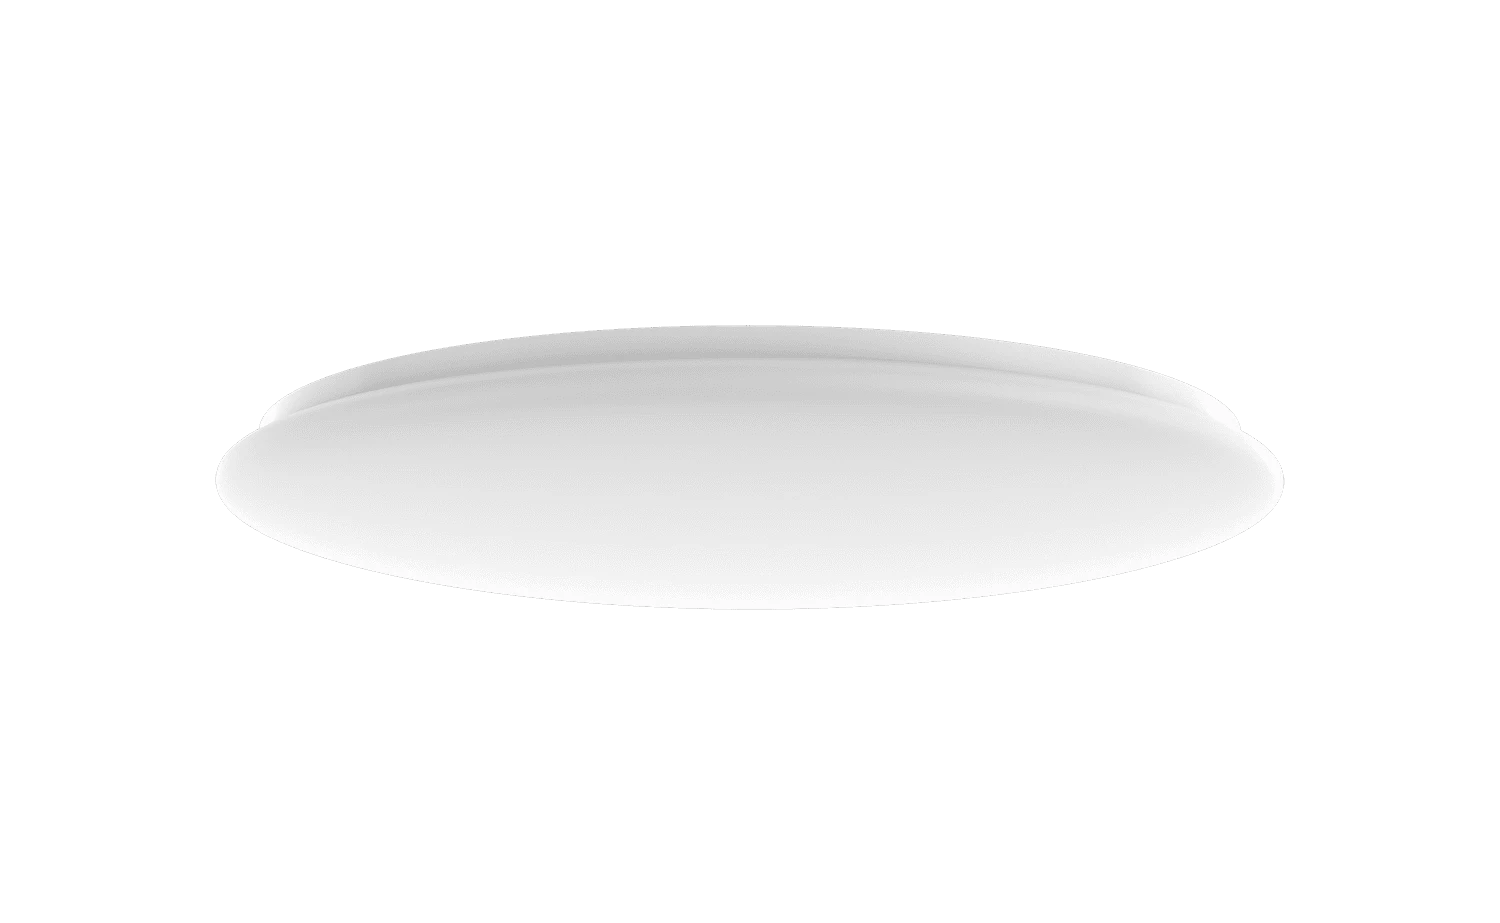 Yeelight Arwen 450C smart ceiling lamp - 4000lm, ⌀495mm